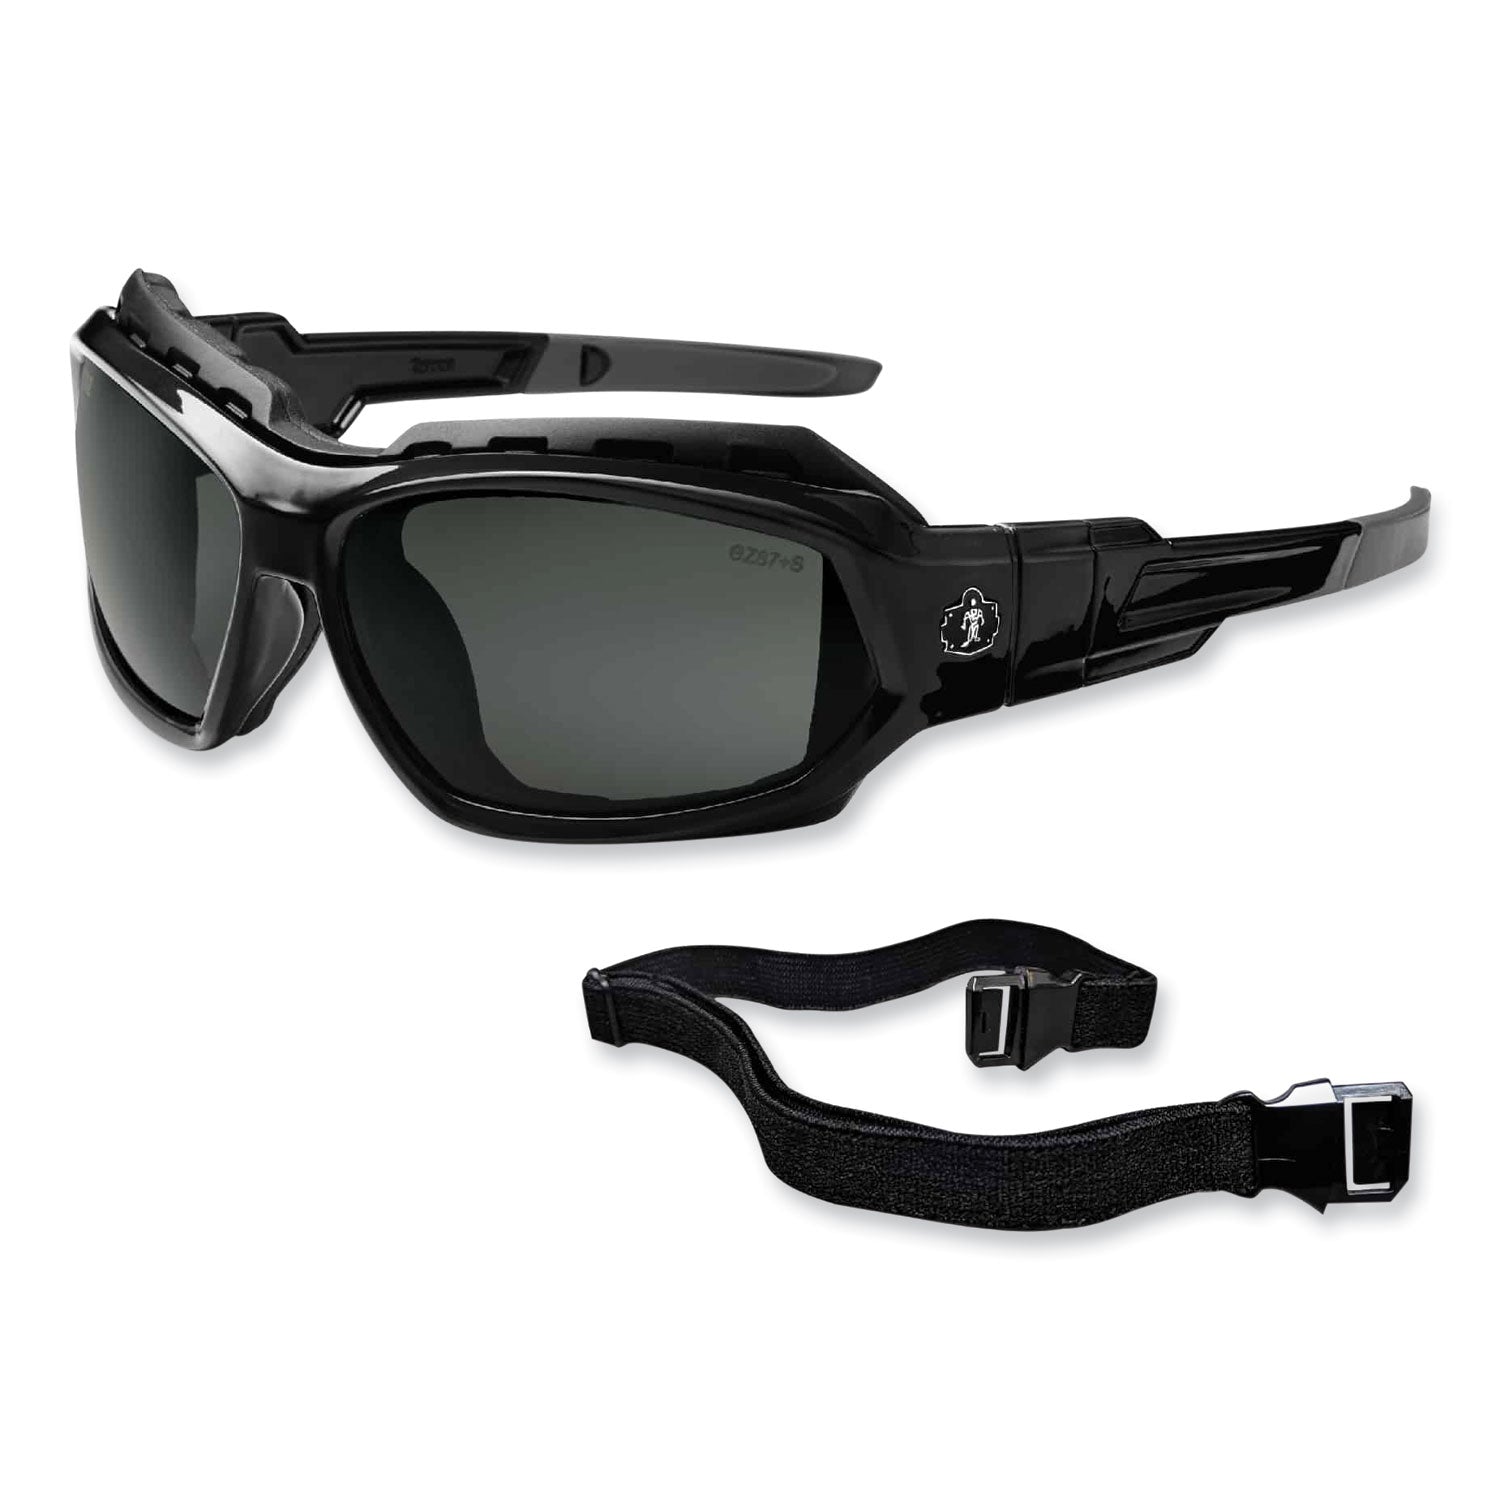 skullerz-loki-safety-glasses-goggles-black-nylon-impact-framepolarized-smoke-polycarbonate-lens-ships-in-1-3-business-days_ego56031 - 6